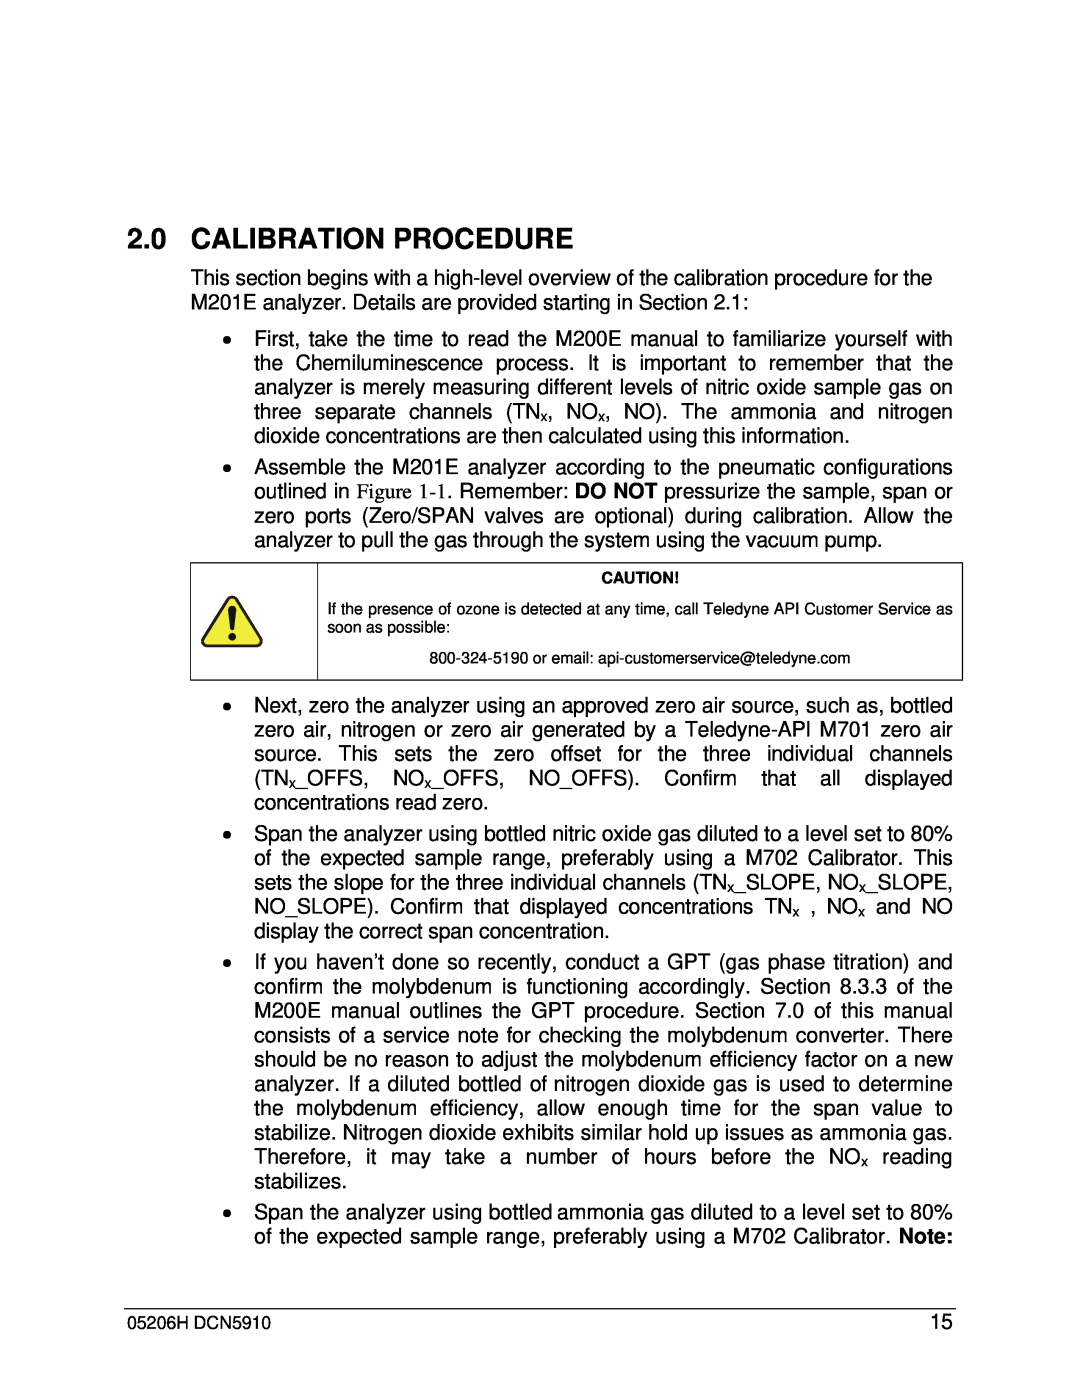 Teledyne M201E manual Calibration Procedure 